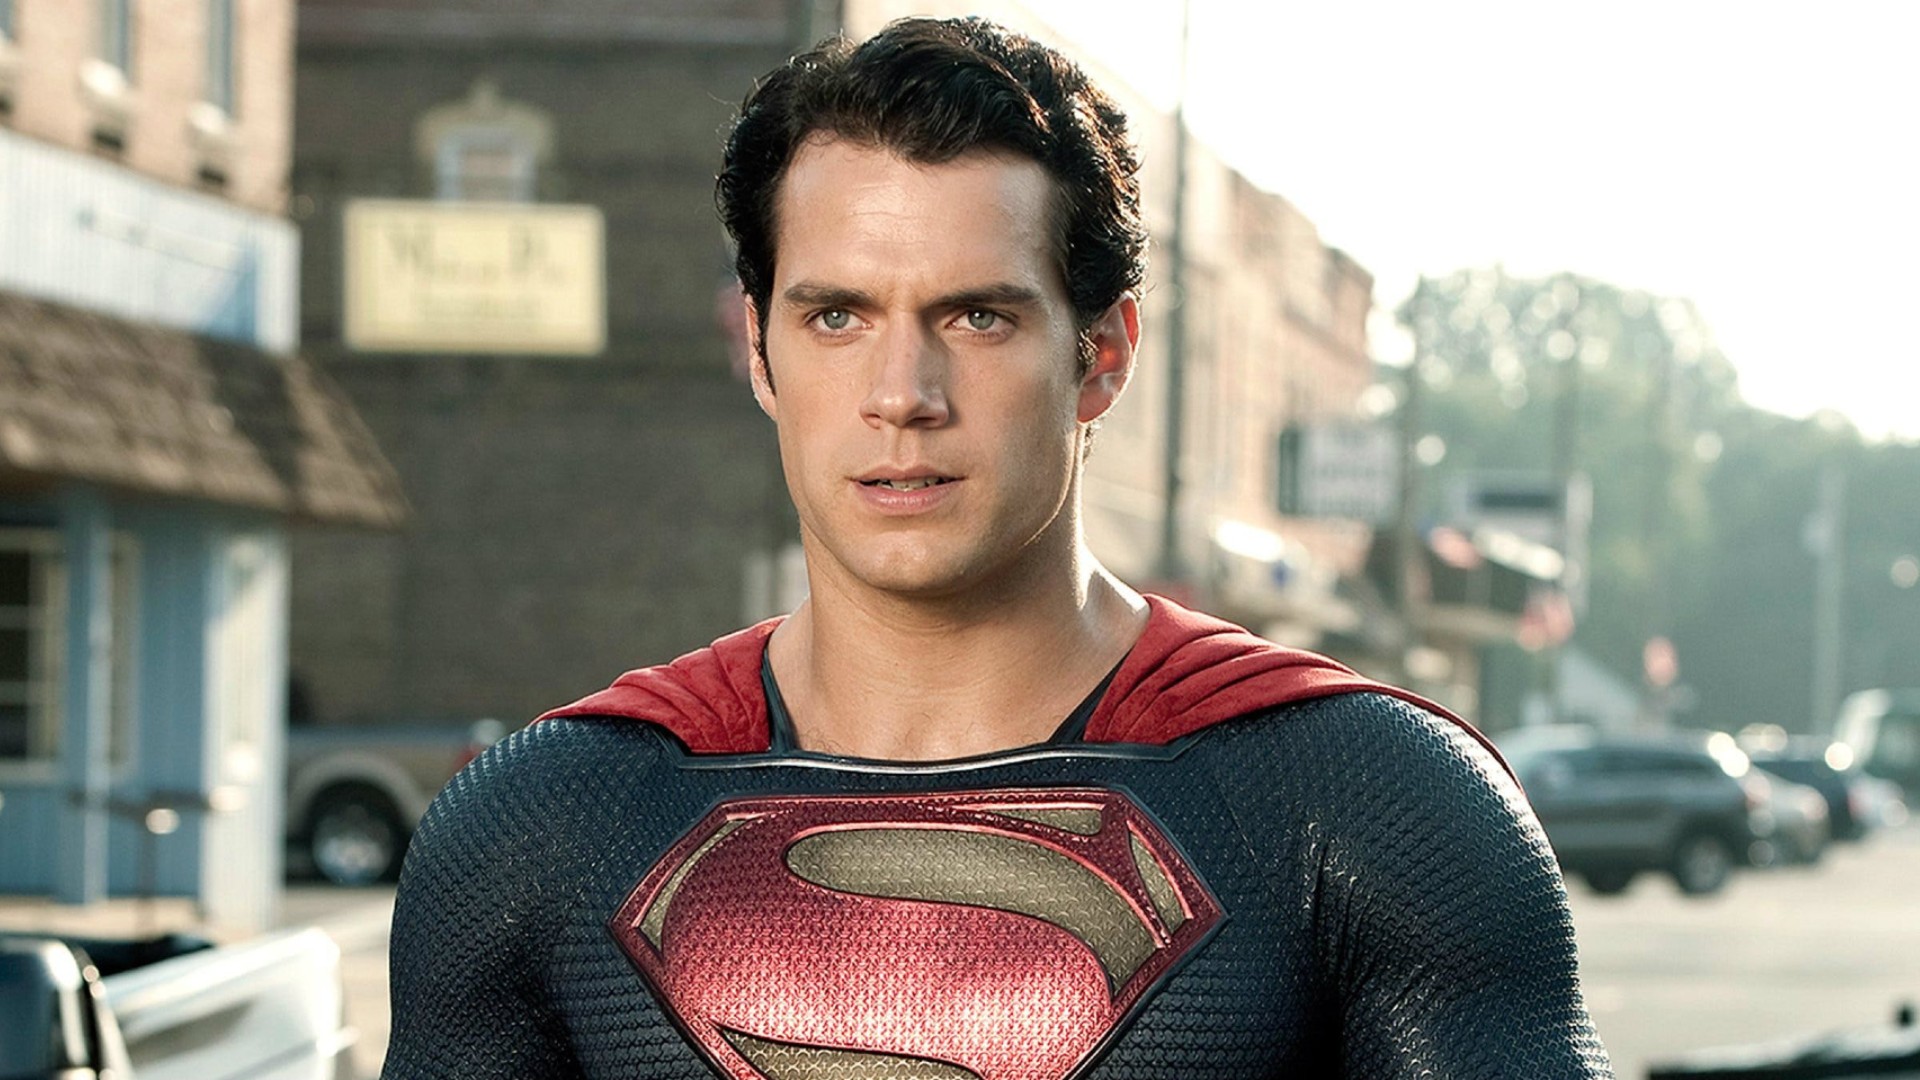 Superman star Henry Cavill 'confirmed for Man of Steel 2' after Black Adam  'demands', Films, Entertainment